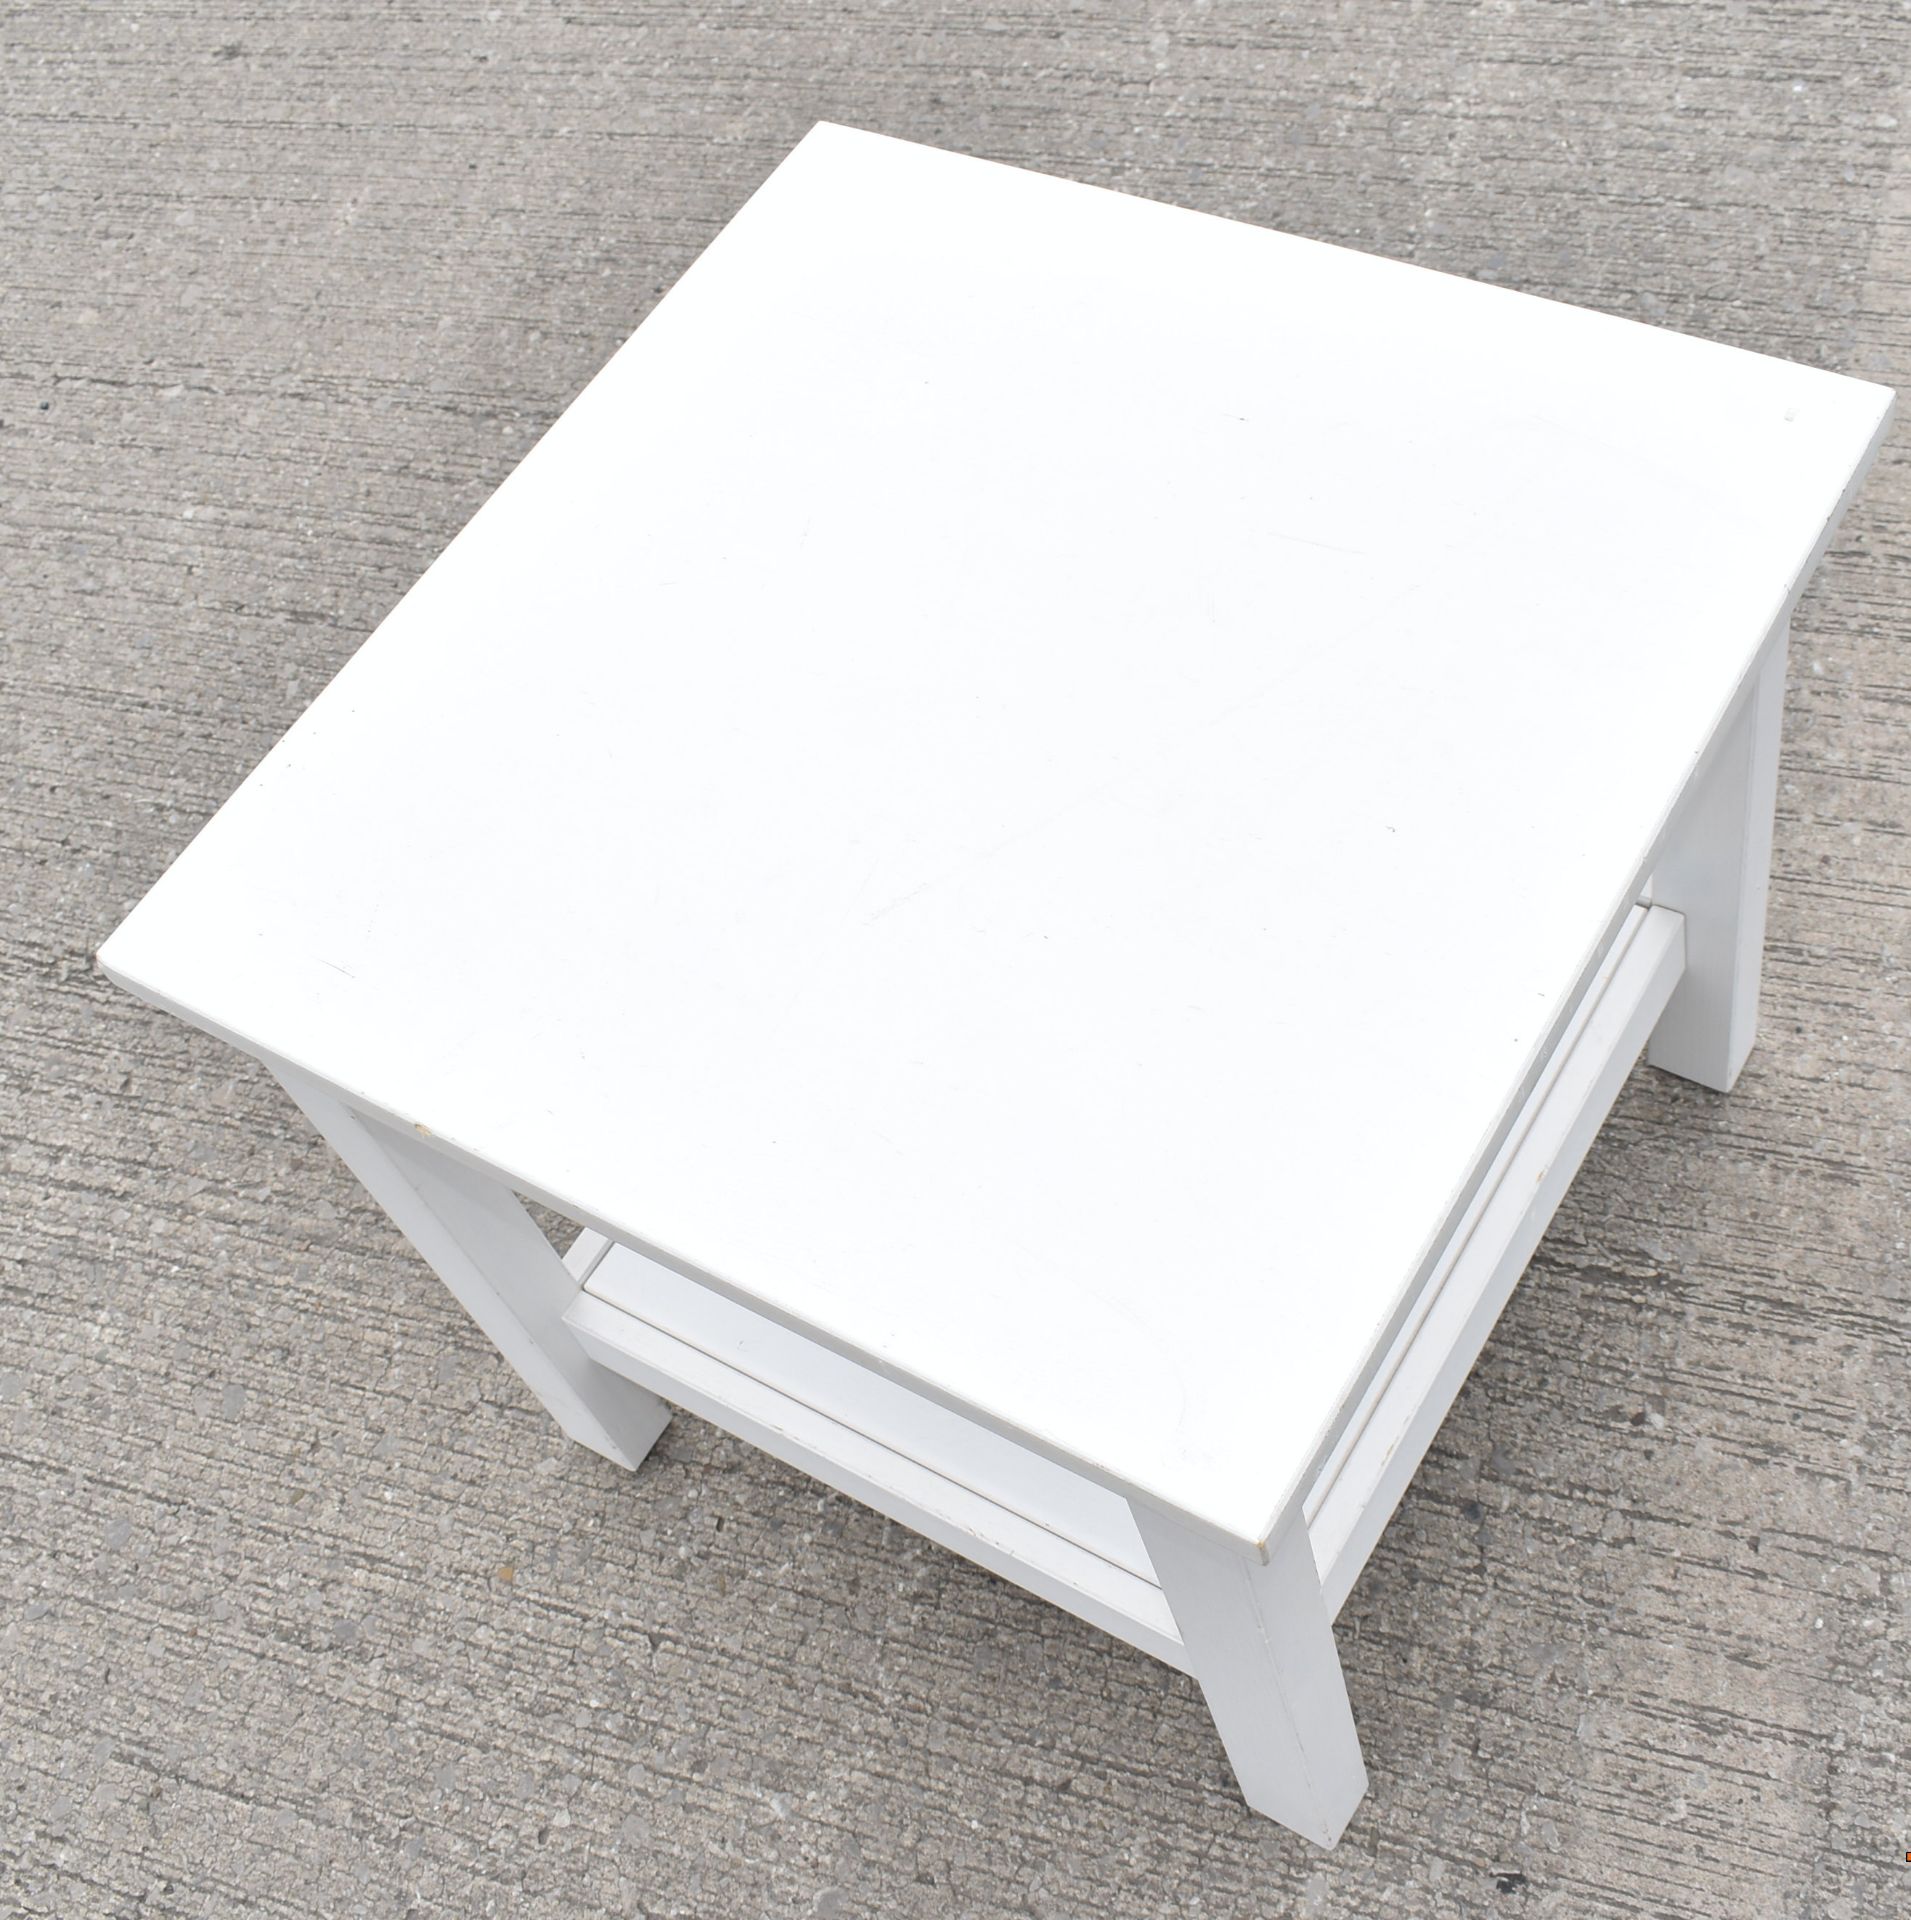 1 x White Square Wooden Table - 56x56x51cm - Ref: K289 - CL905 - Location: Altrincham WA14*Stock - Image 7 of 9